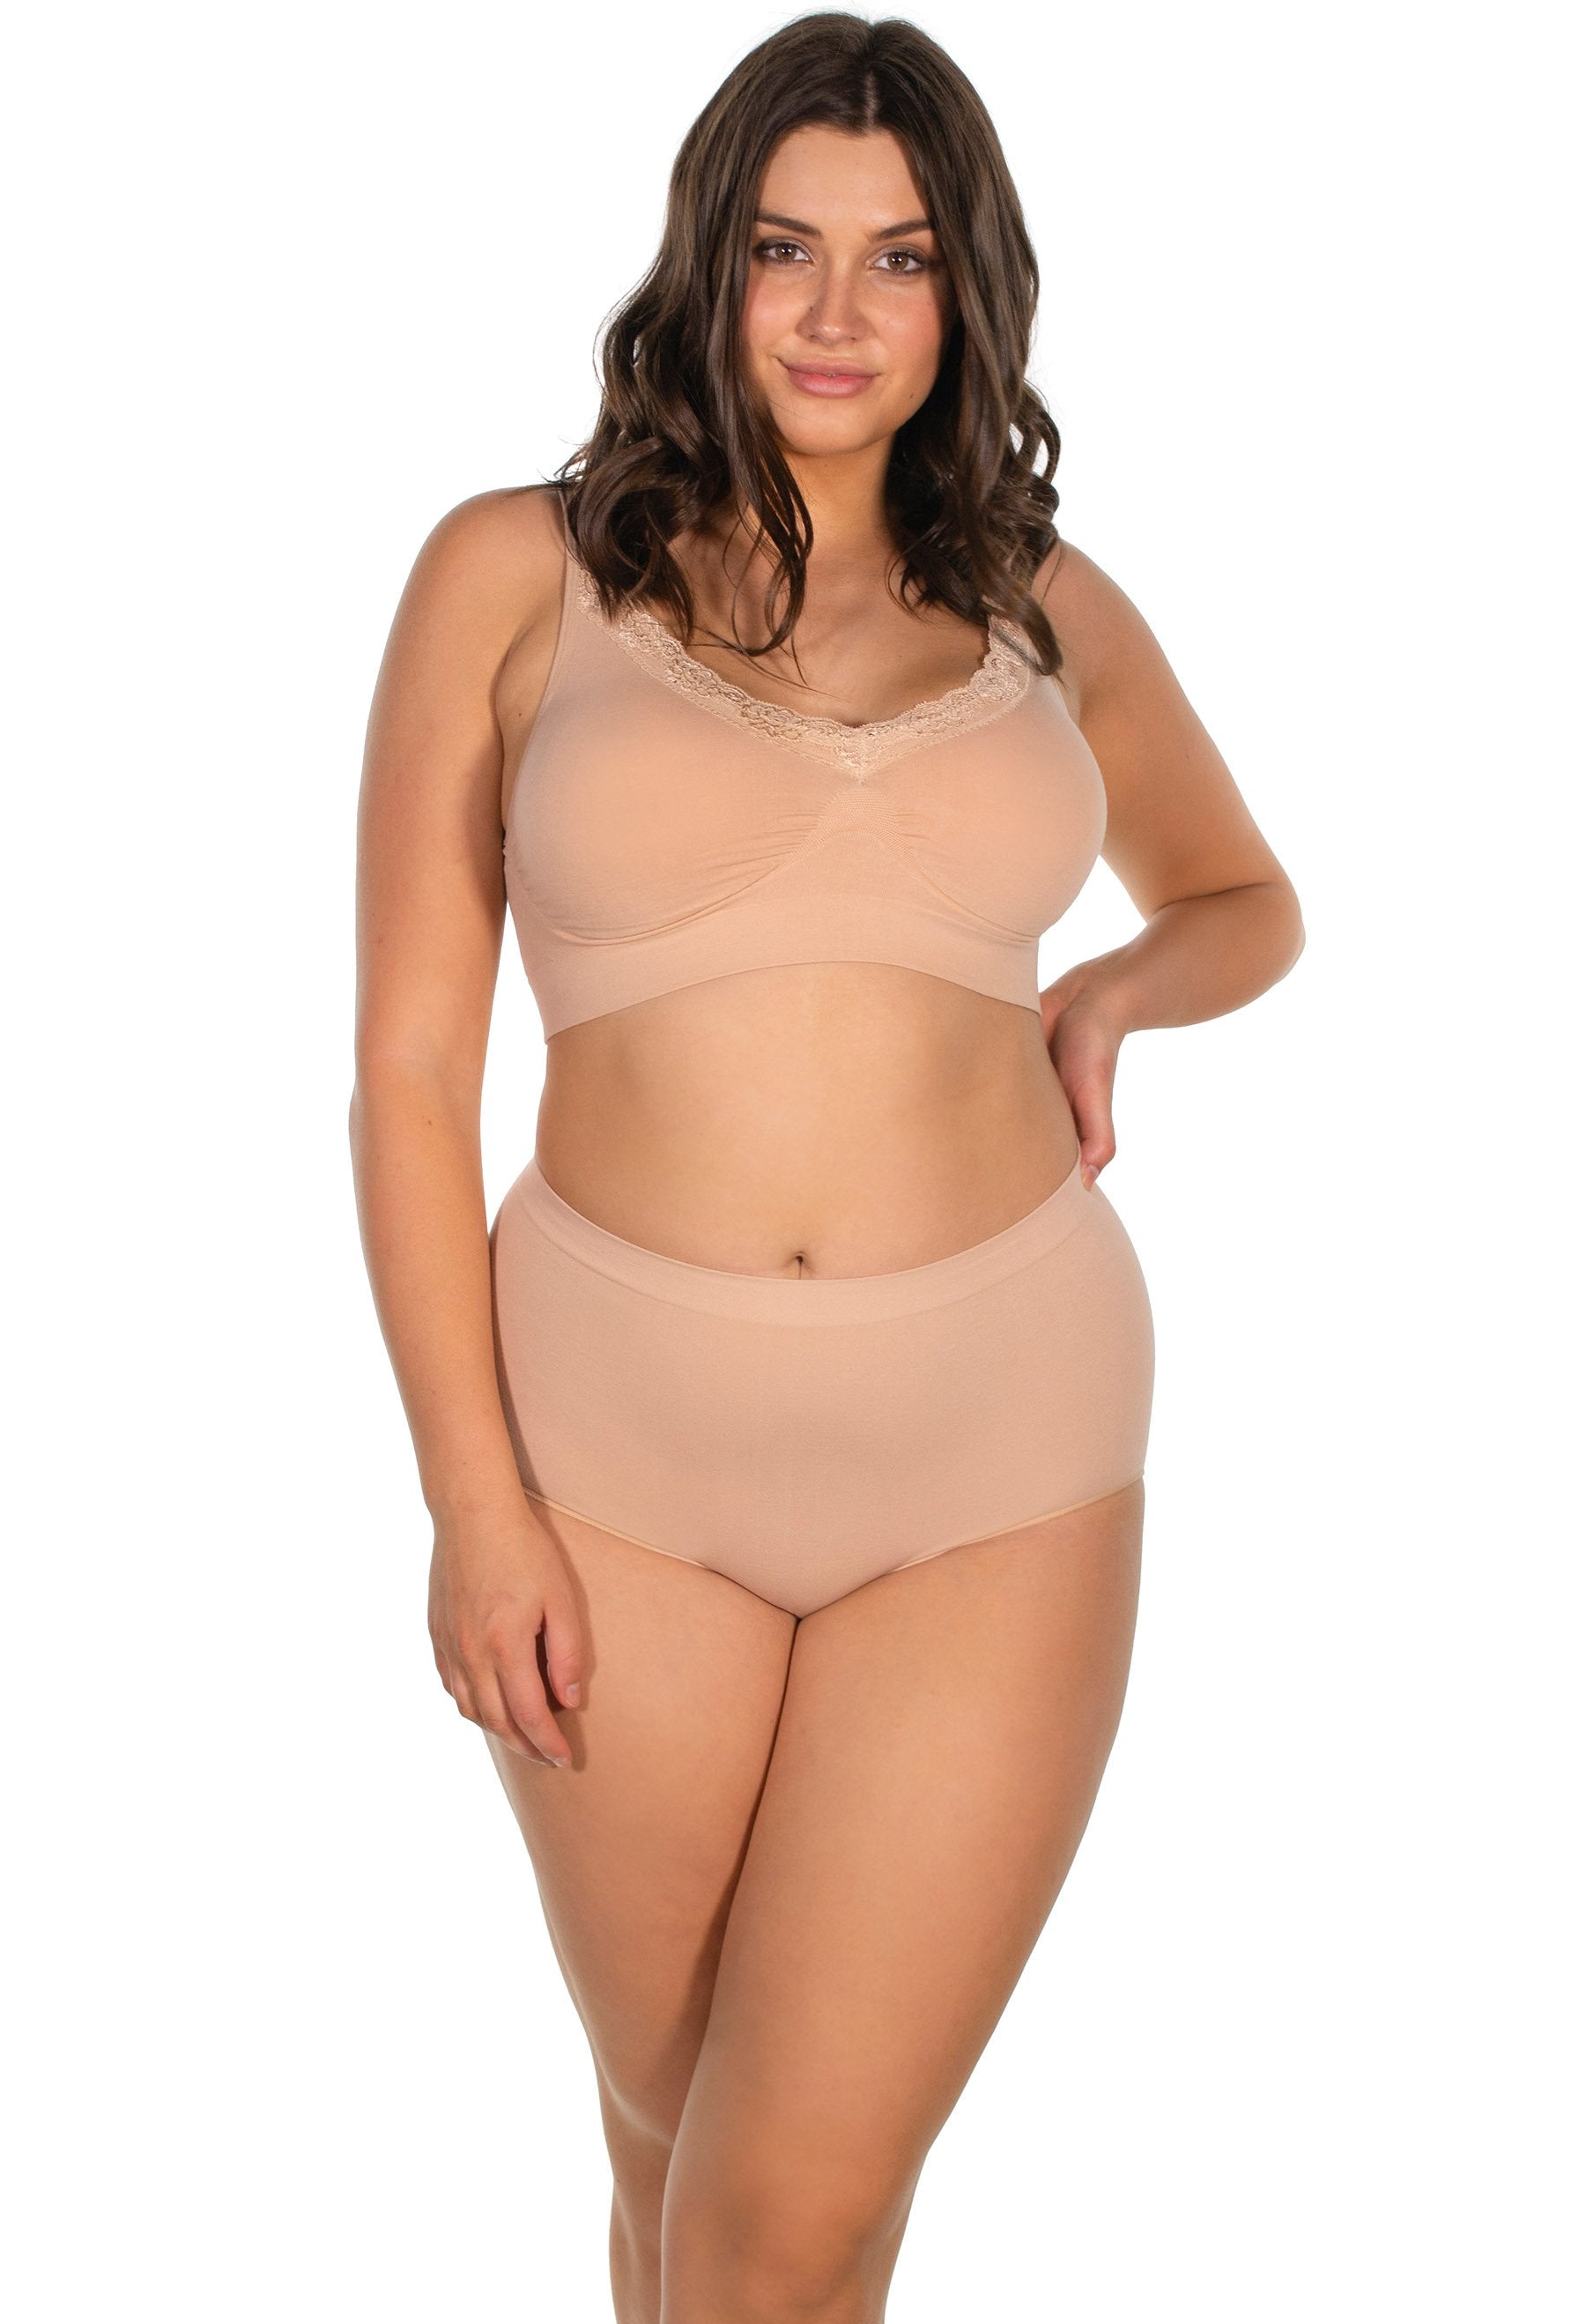 Wholesale cotton sleep bra plus size For Supportive Underwear